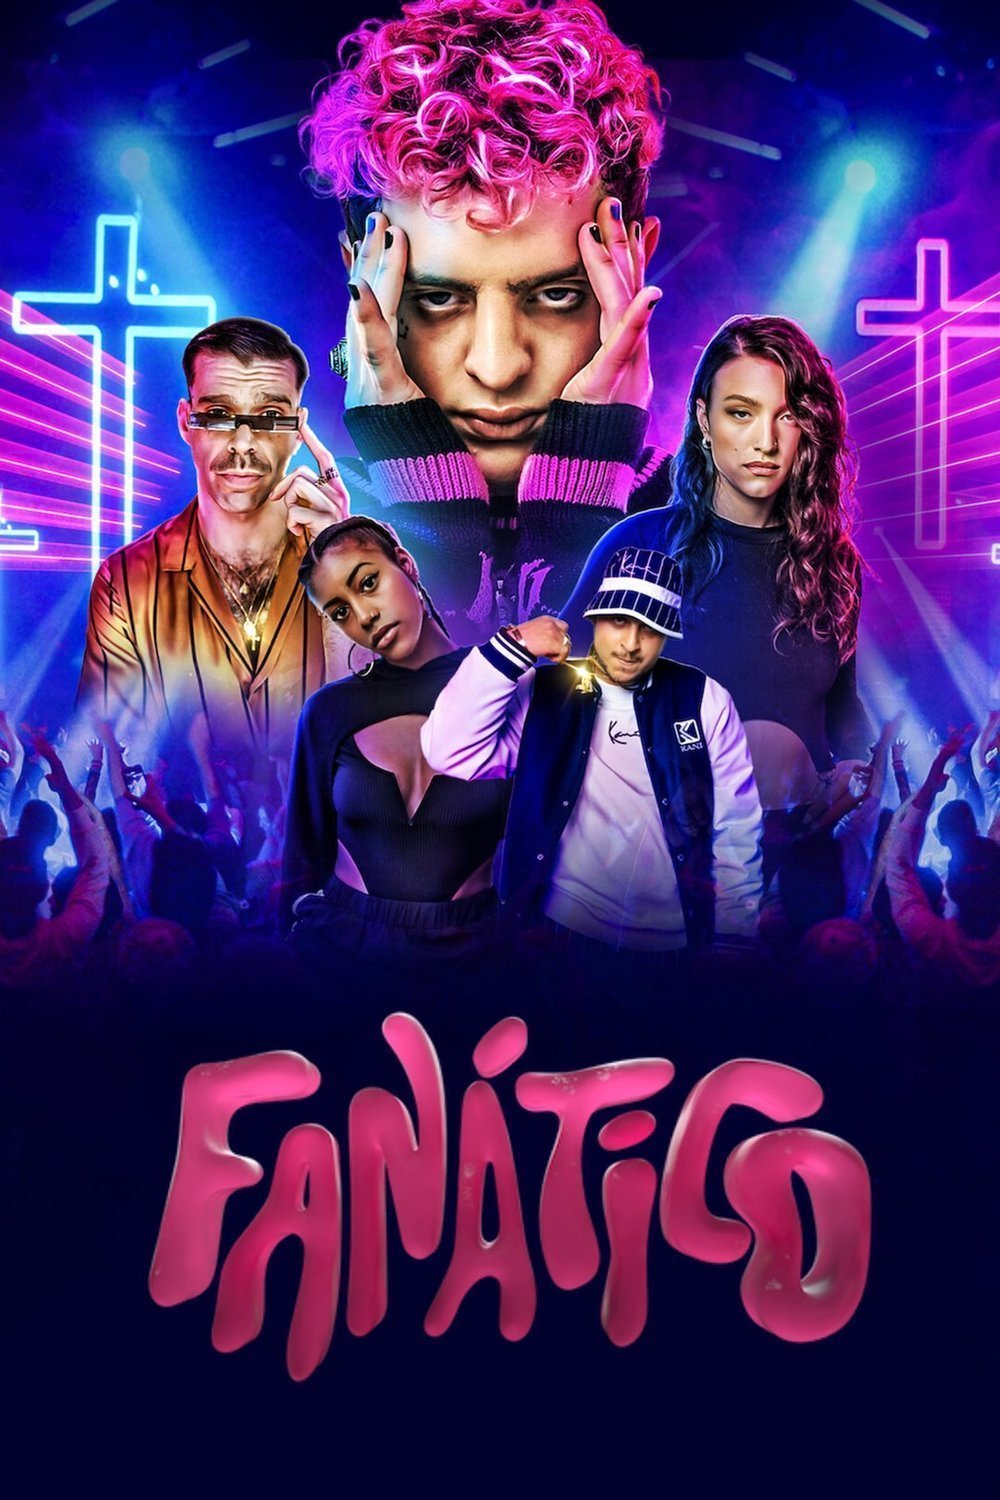 Spanish poster of the movie Fanático